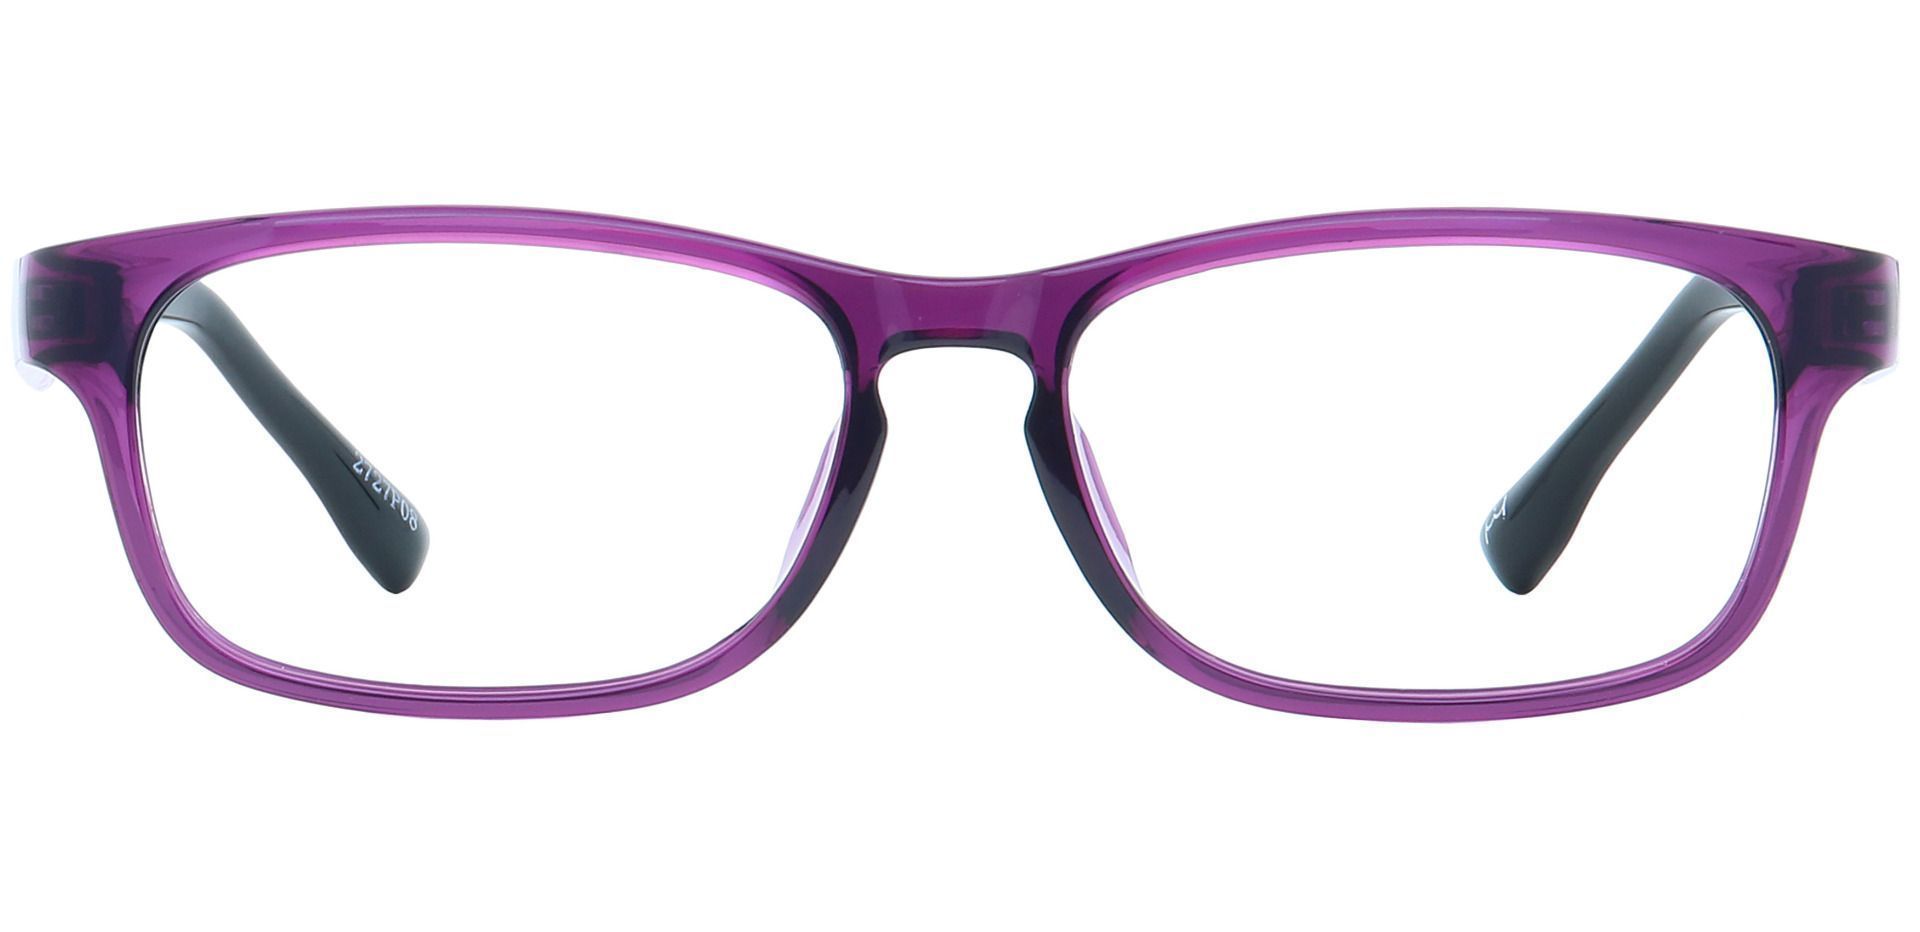 Charlie Rectangle Blue Light Blocking Glasses - Purple